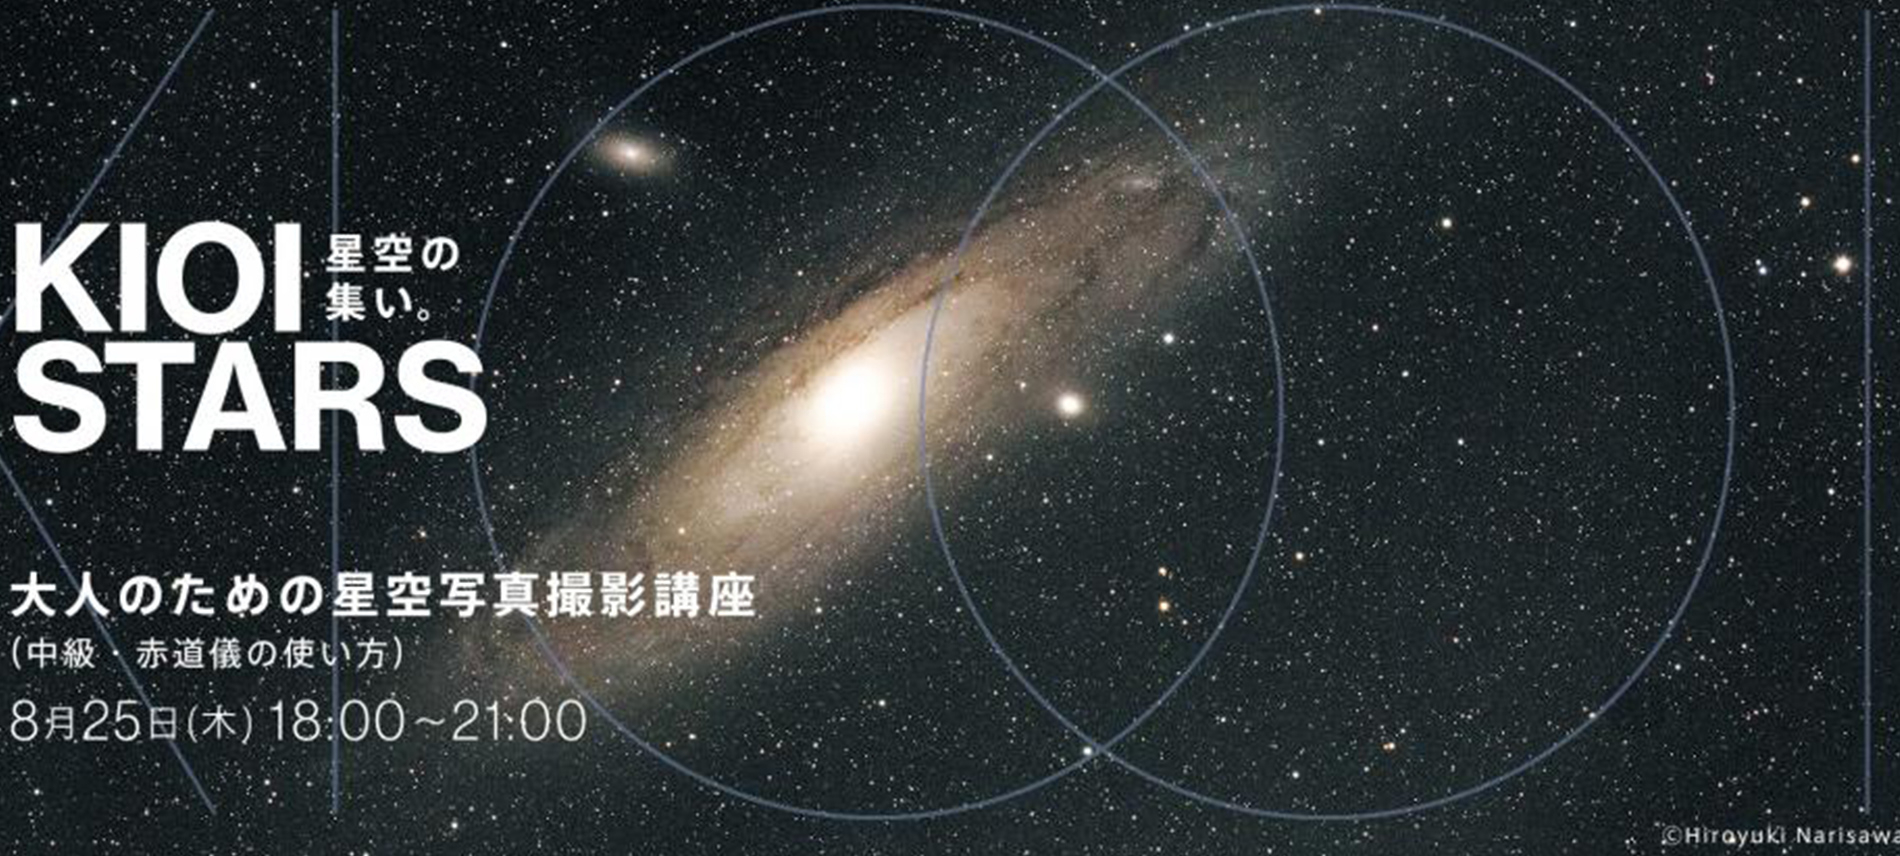 KIOI STARS 星空の集い。―大人のための星空写真撮影講座（中級・赤道儀の使い方）―